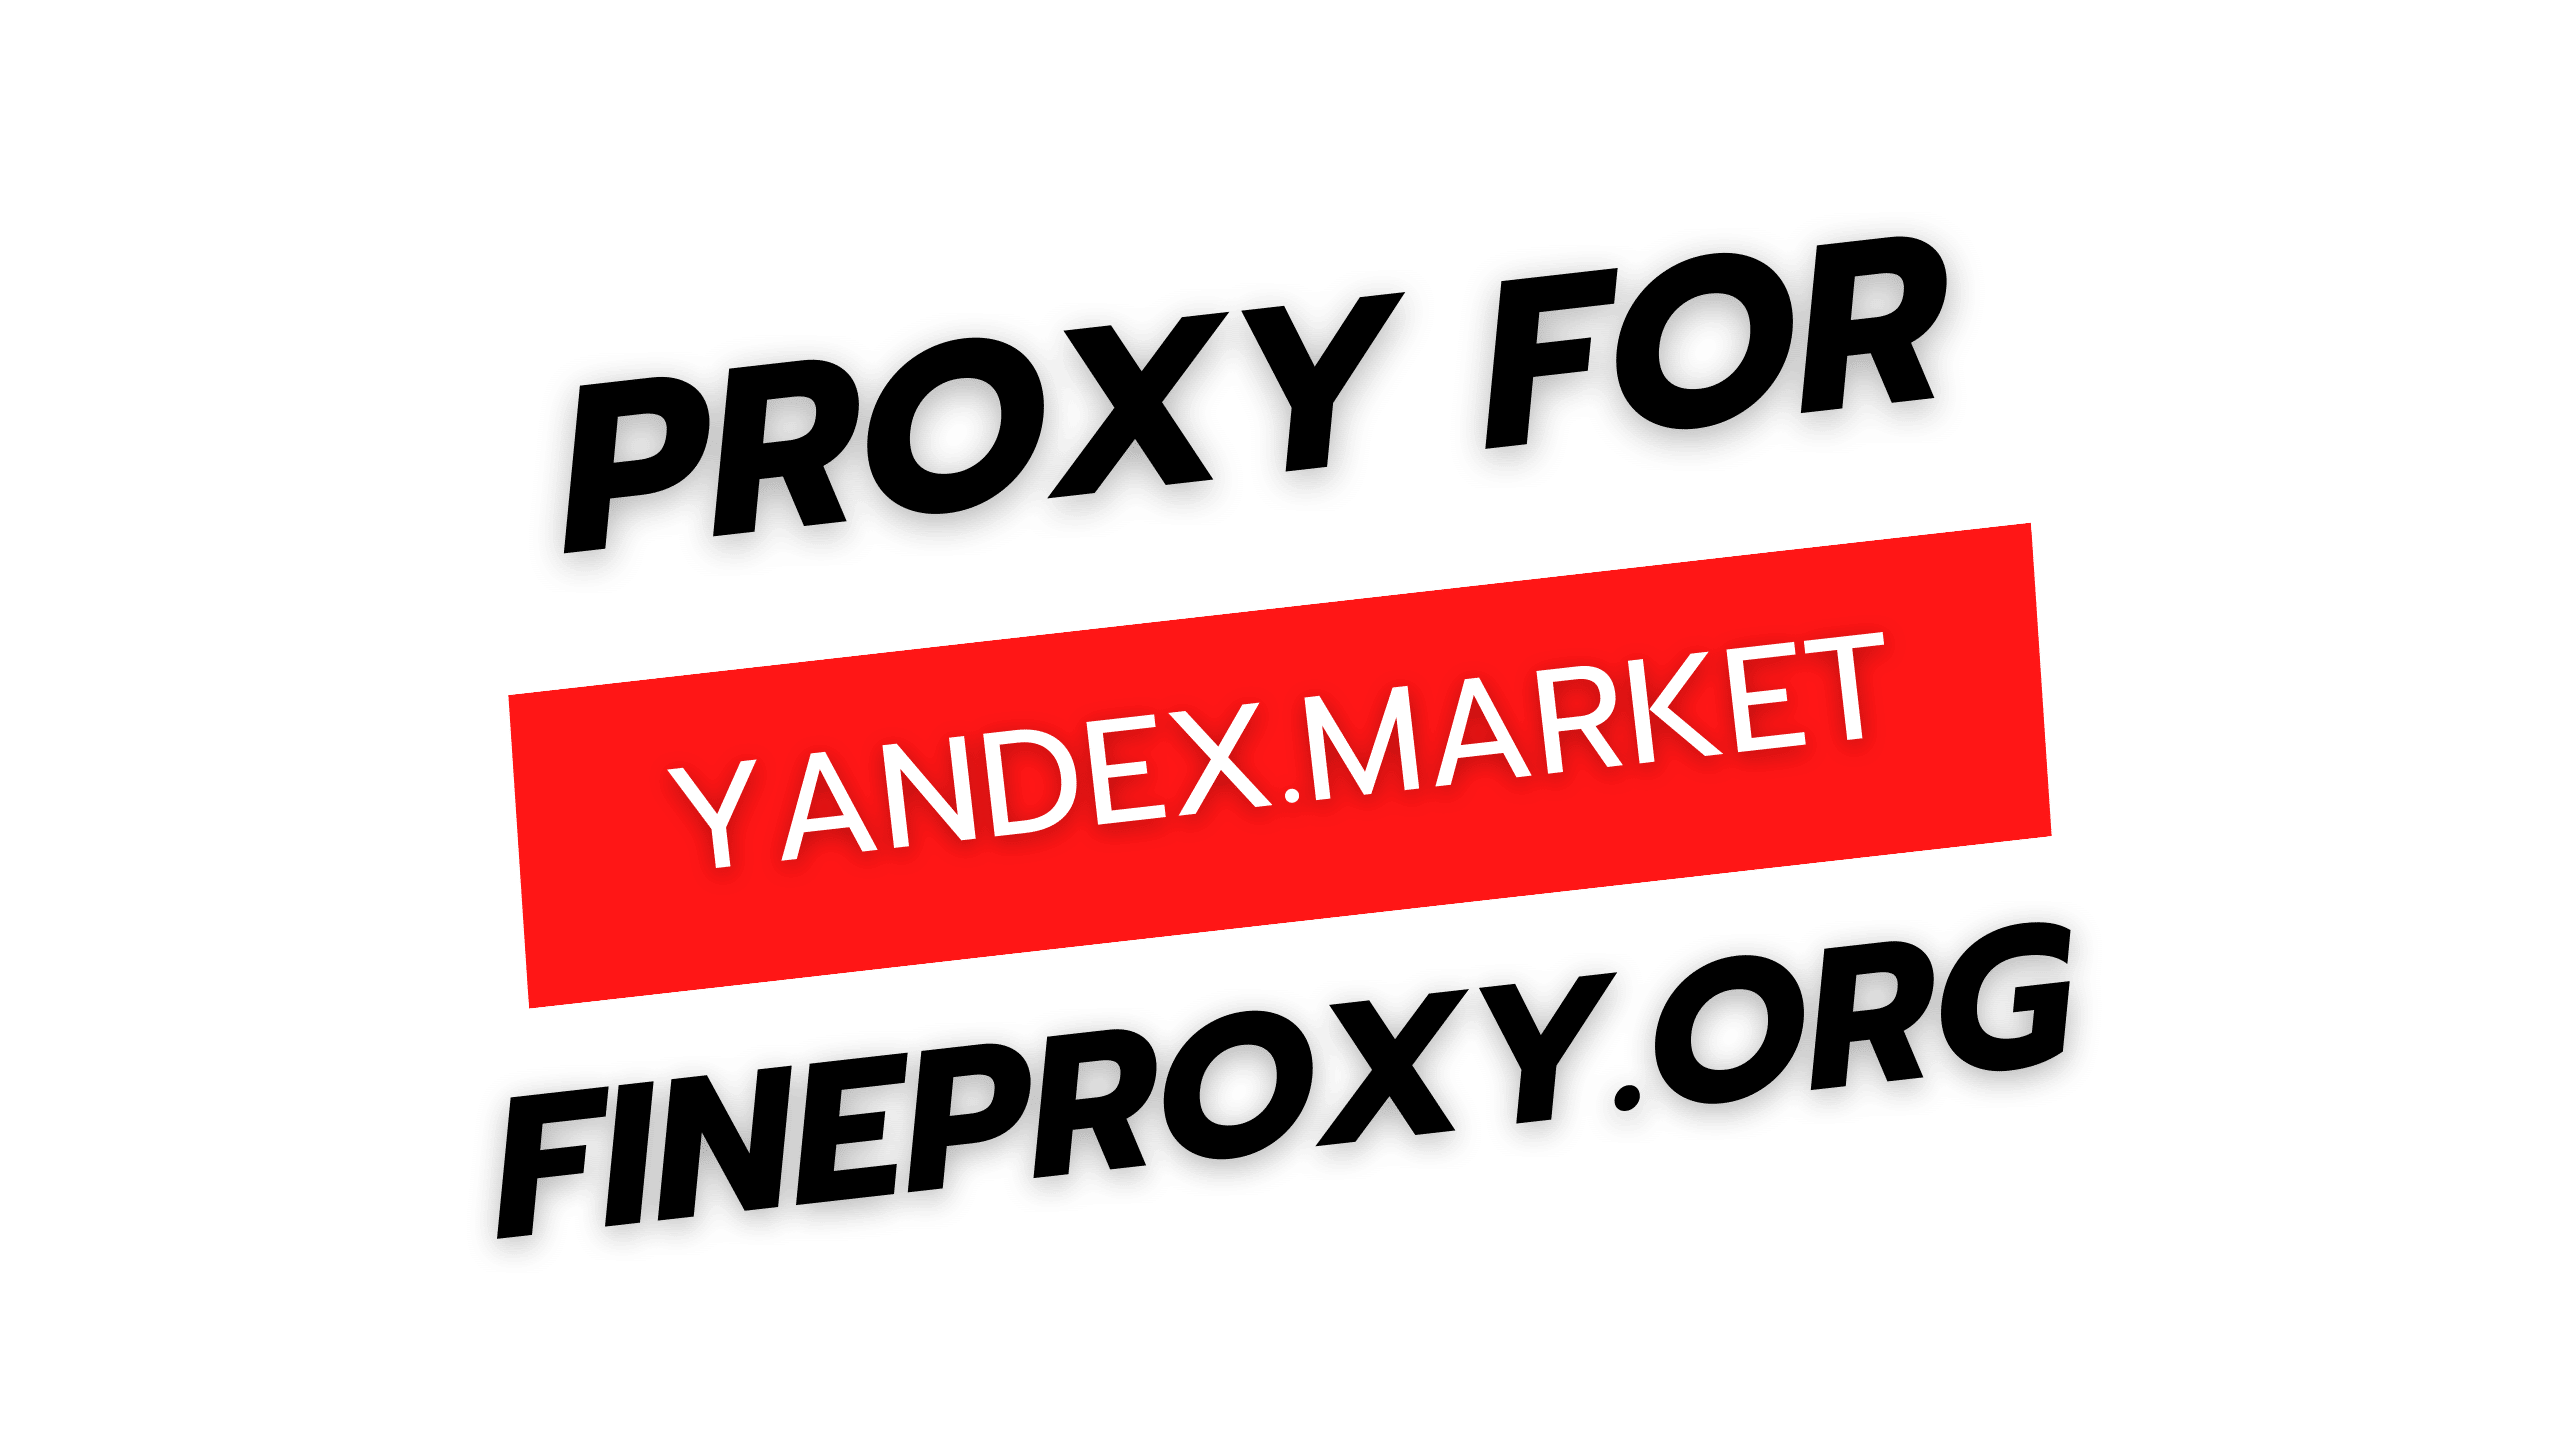 Yandex.Markt